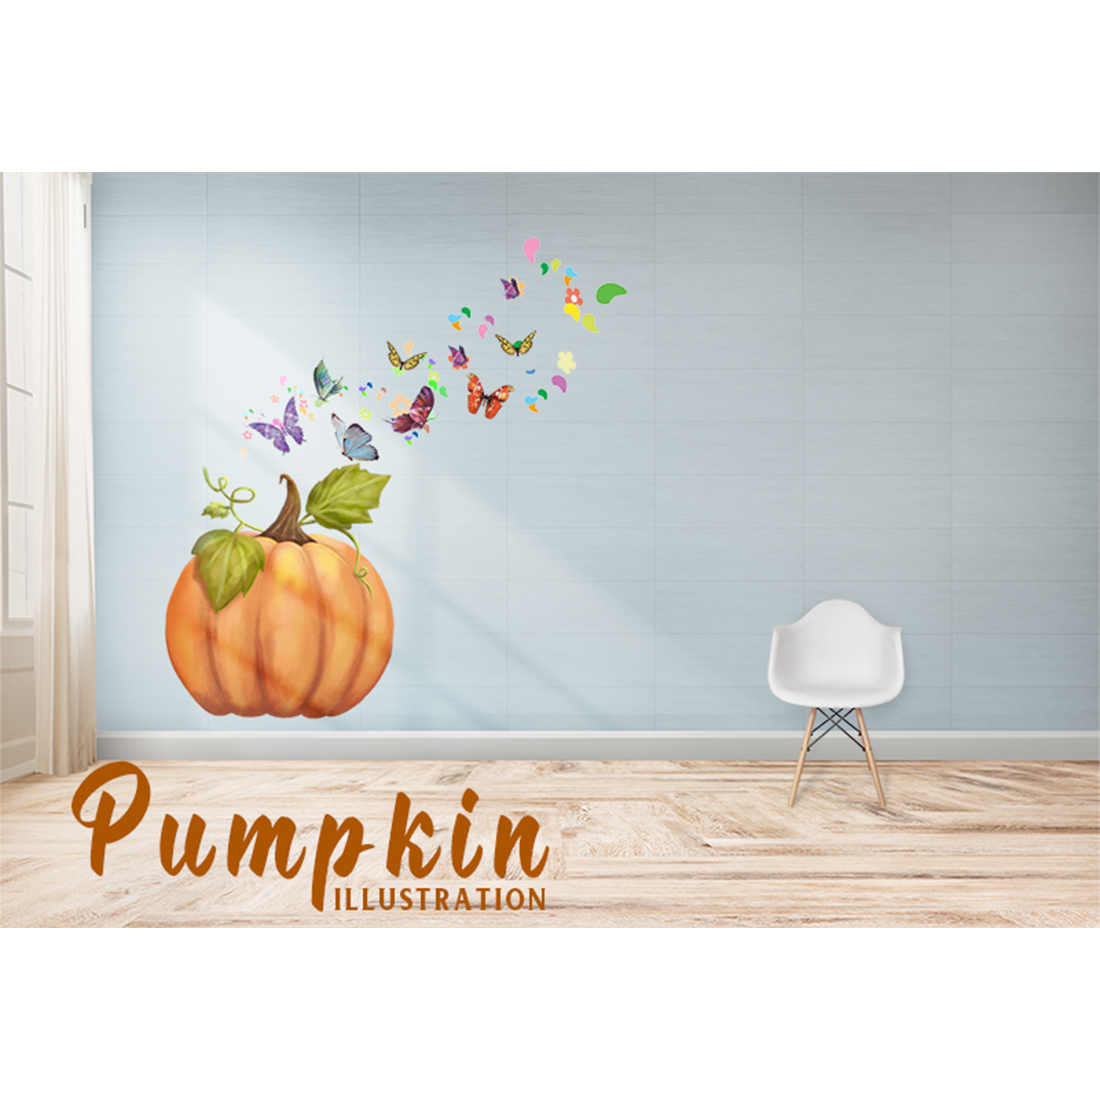 Wonderful image with pumpkin